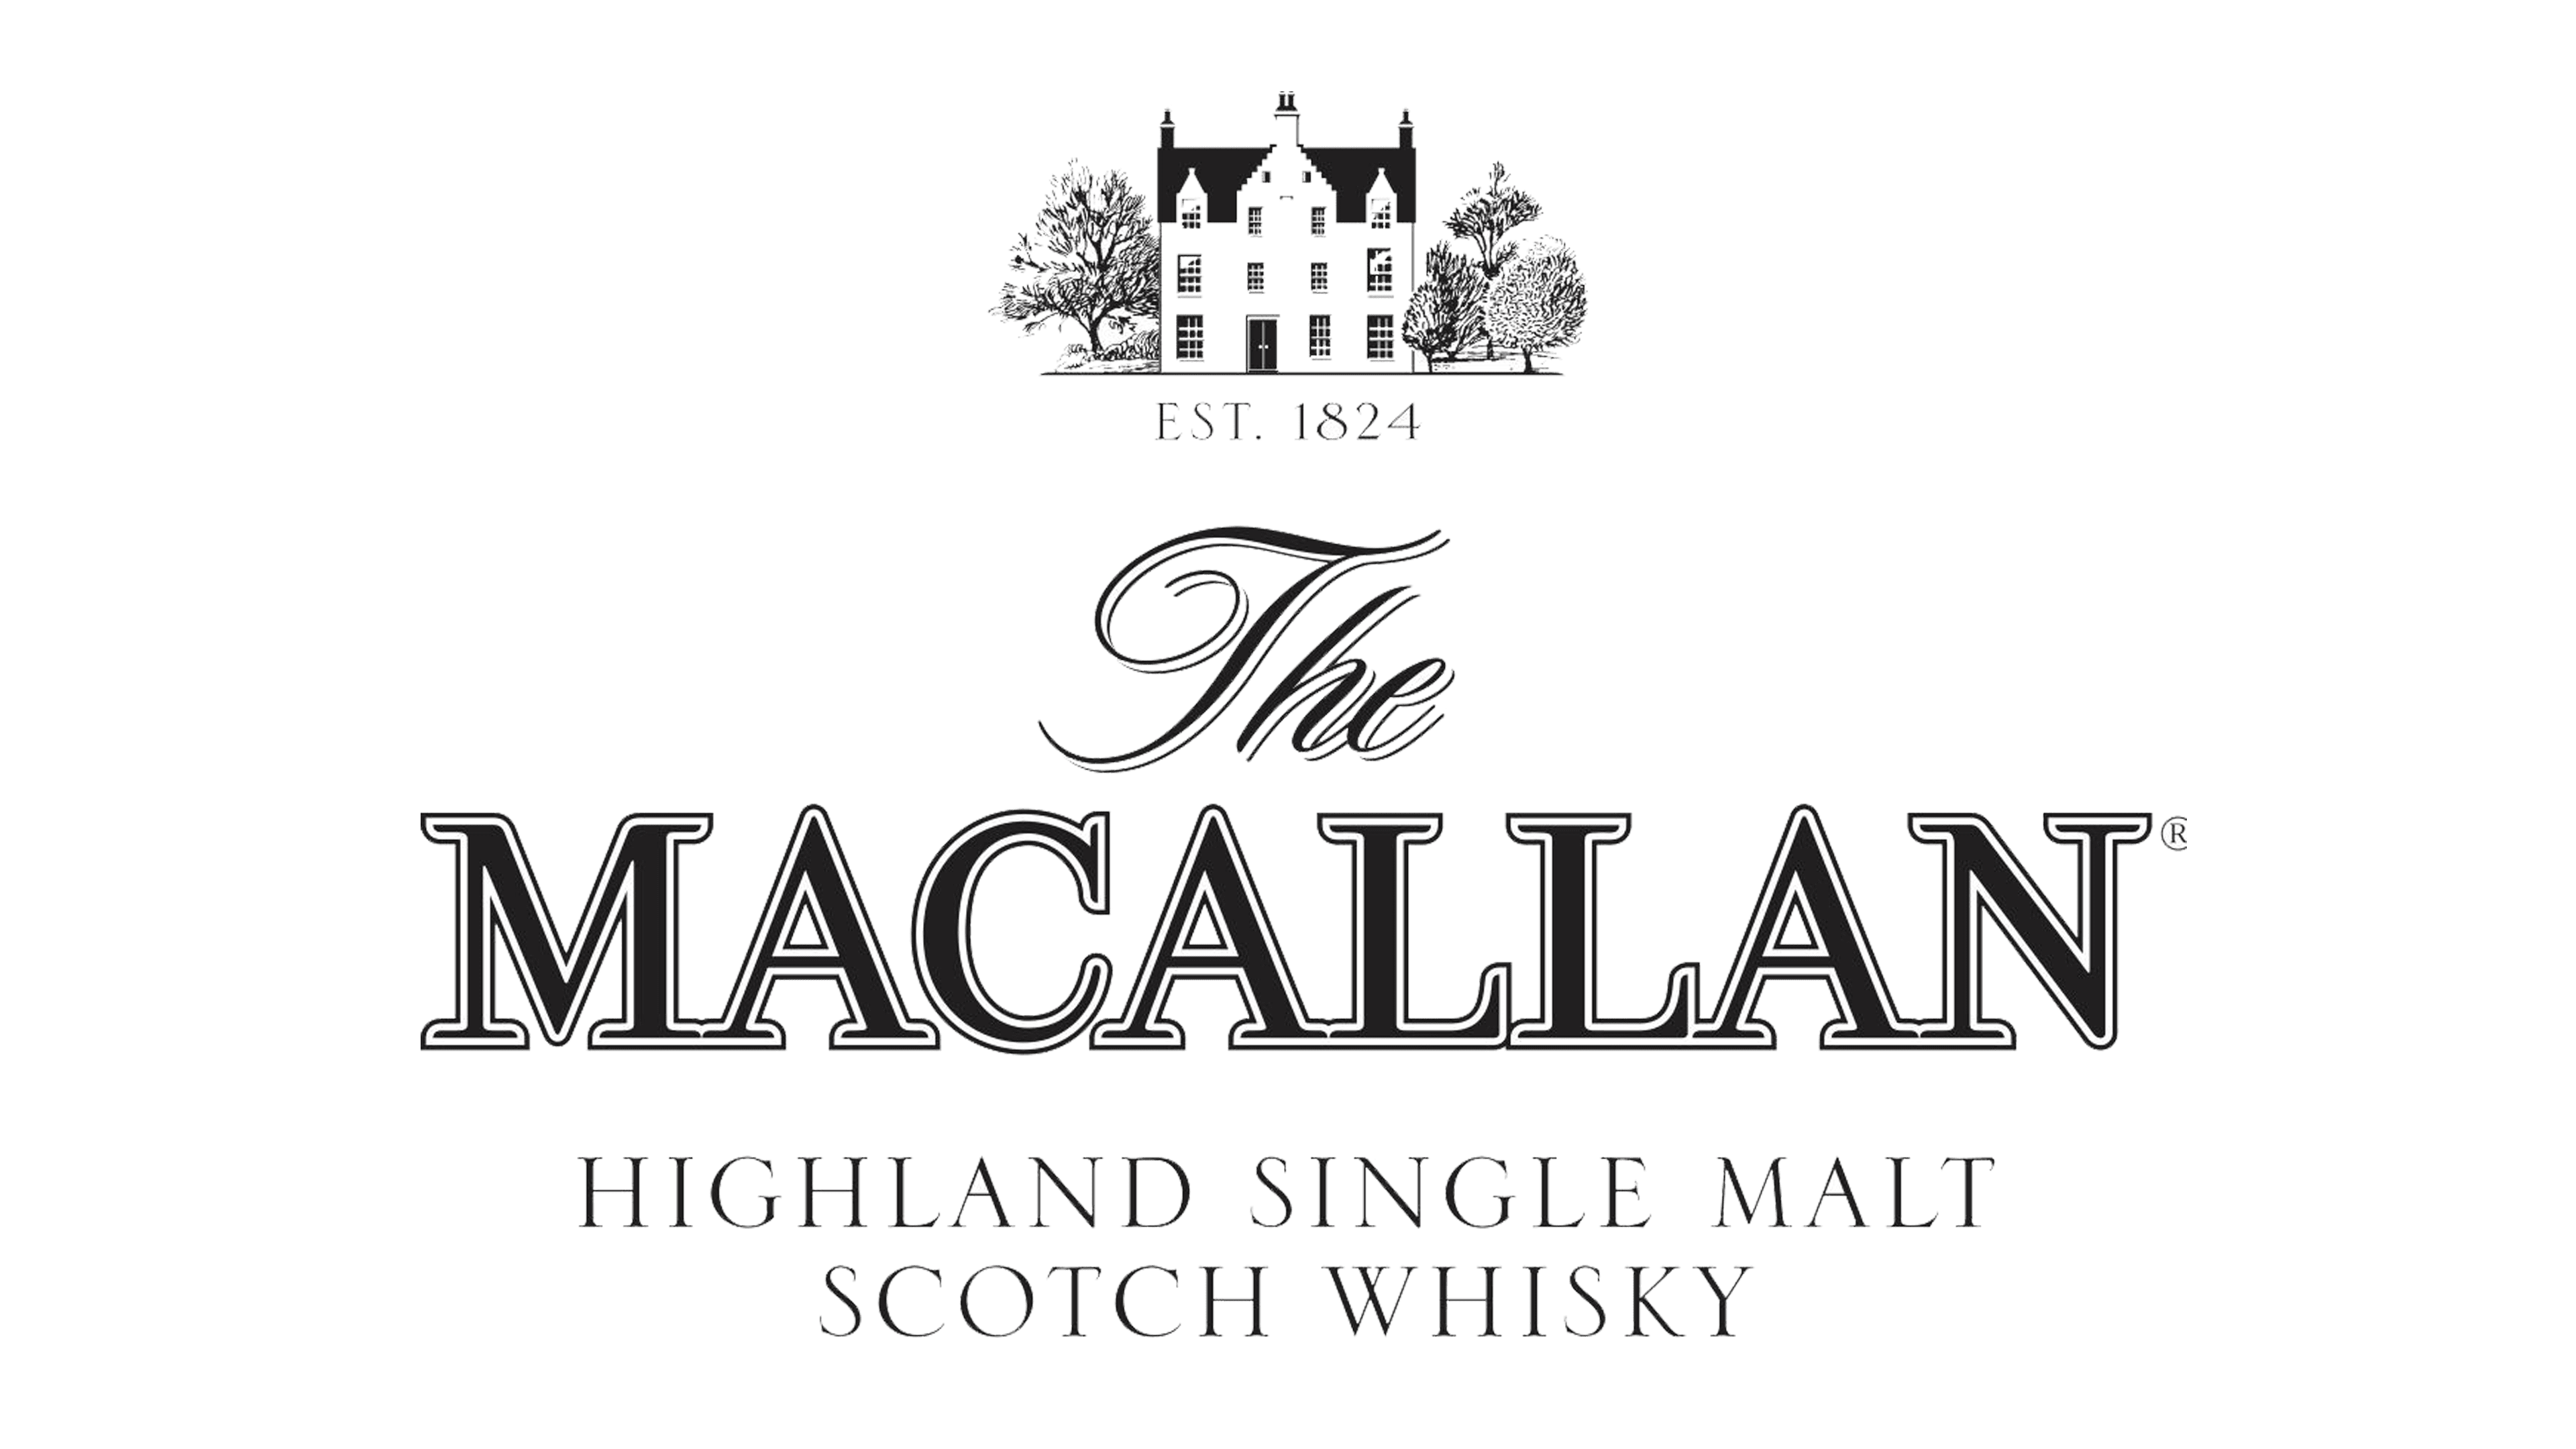 The Macallan Brand Logo